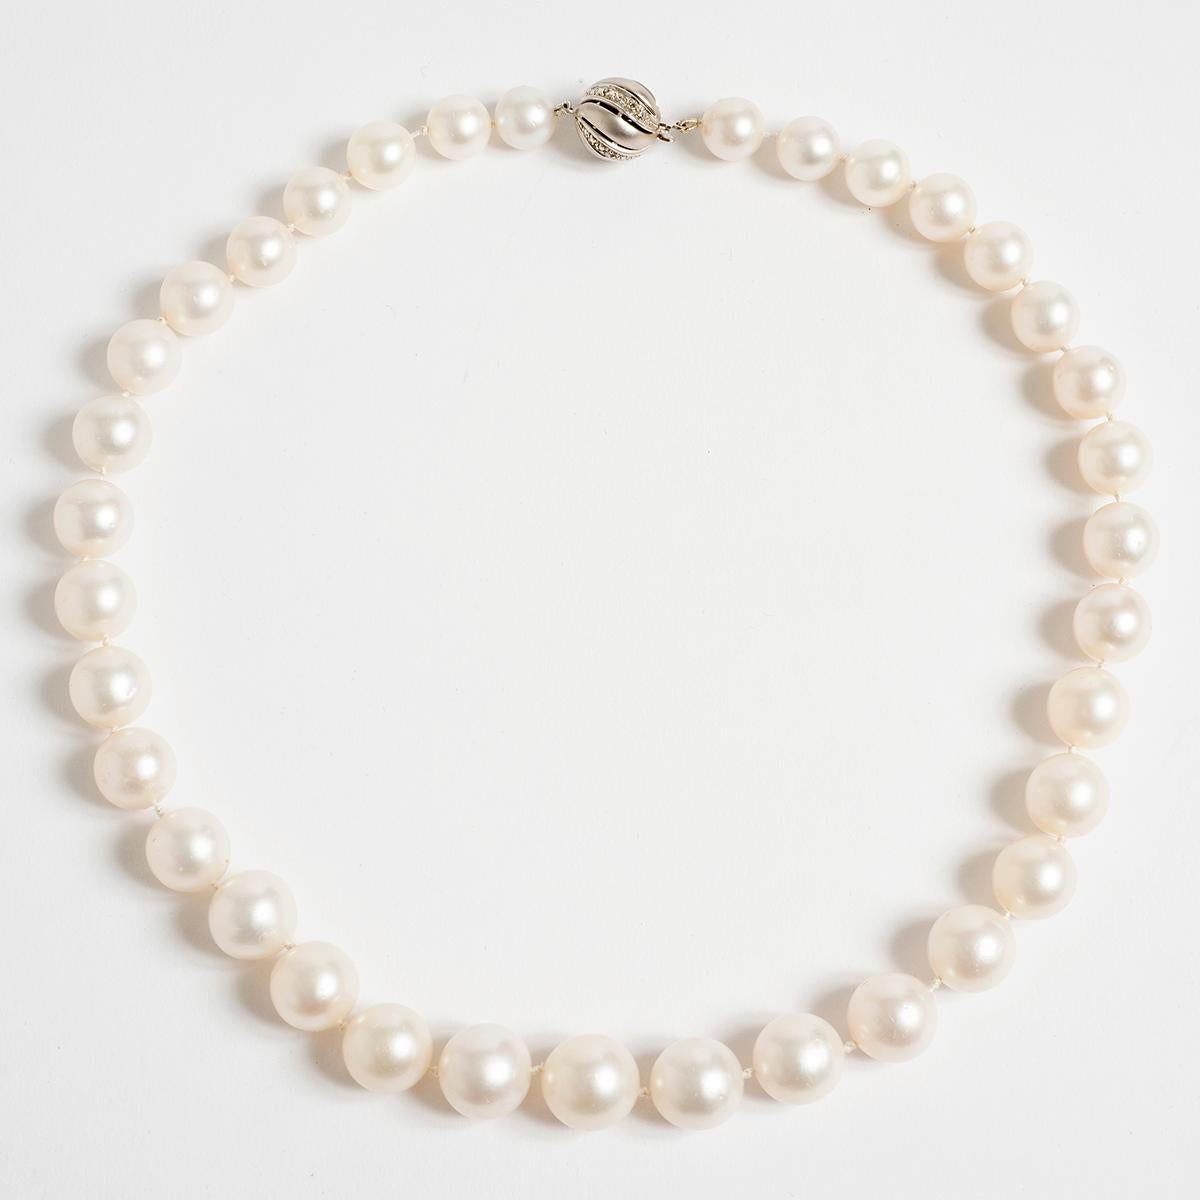 Brilliant Cut South Seas Pearl Necklace, 14 Karat White Gold Set, Polished Diamonds